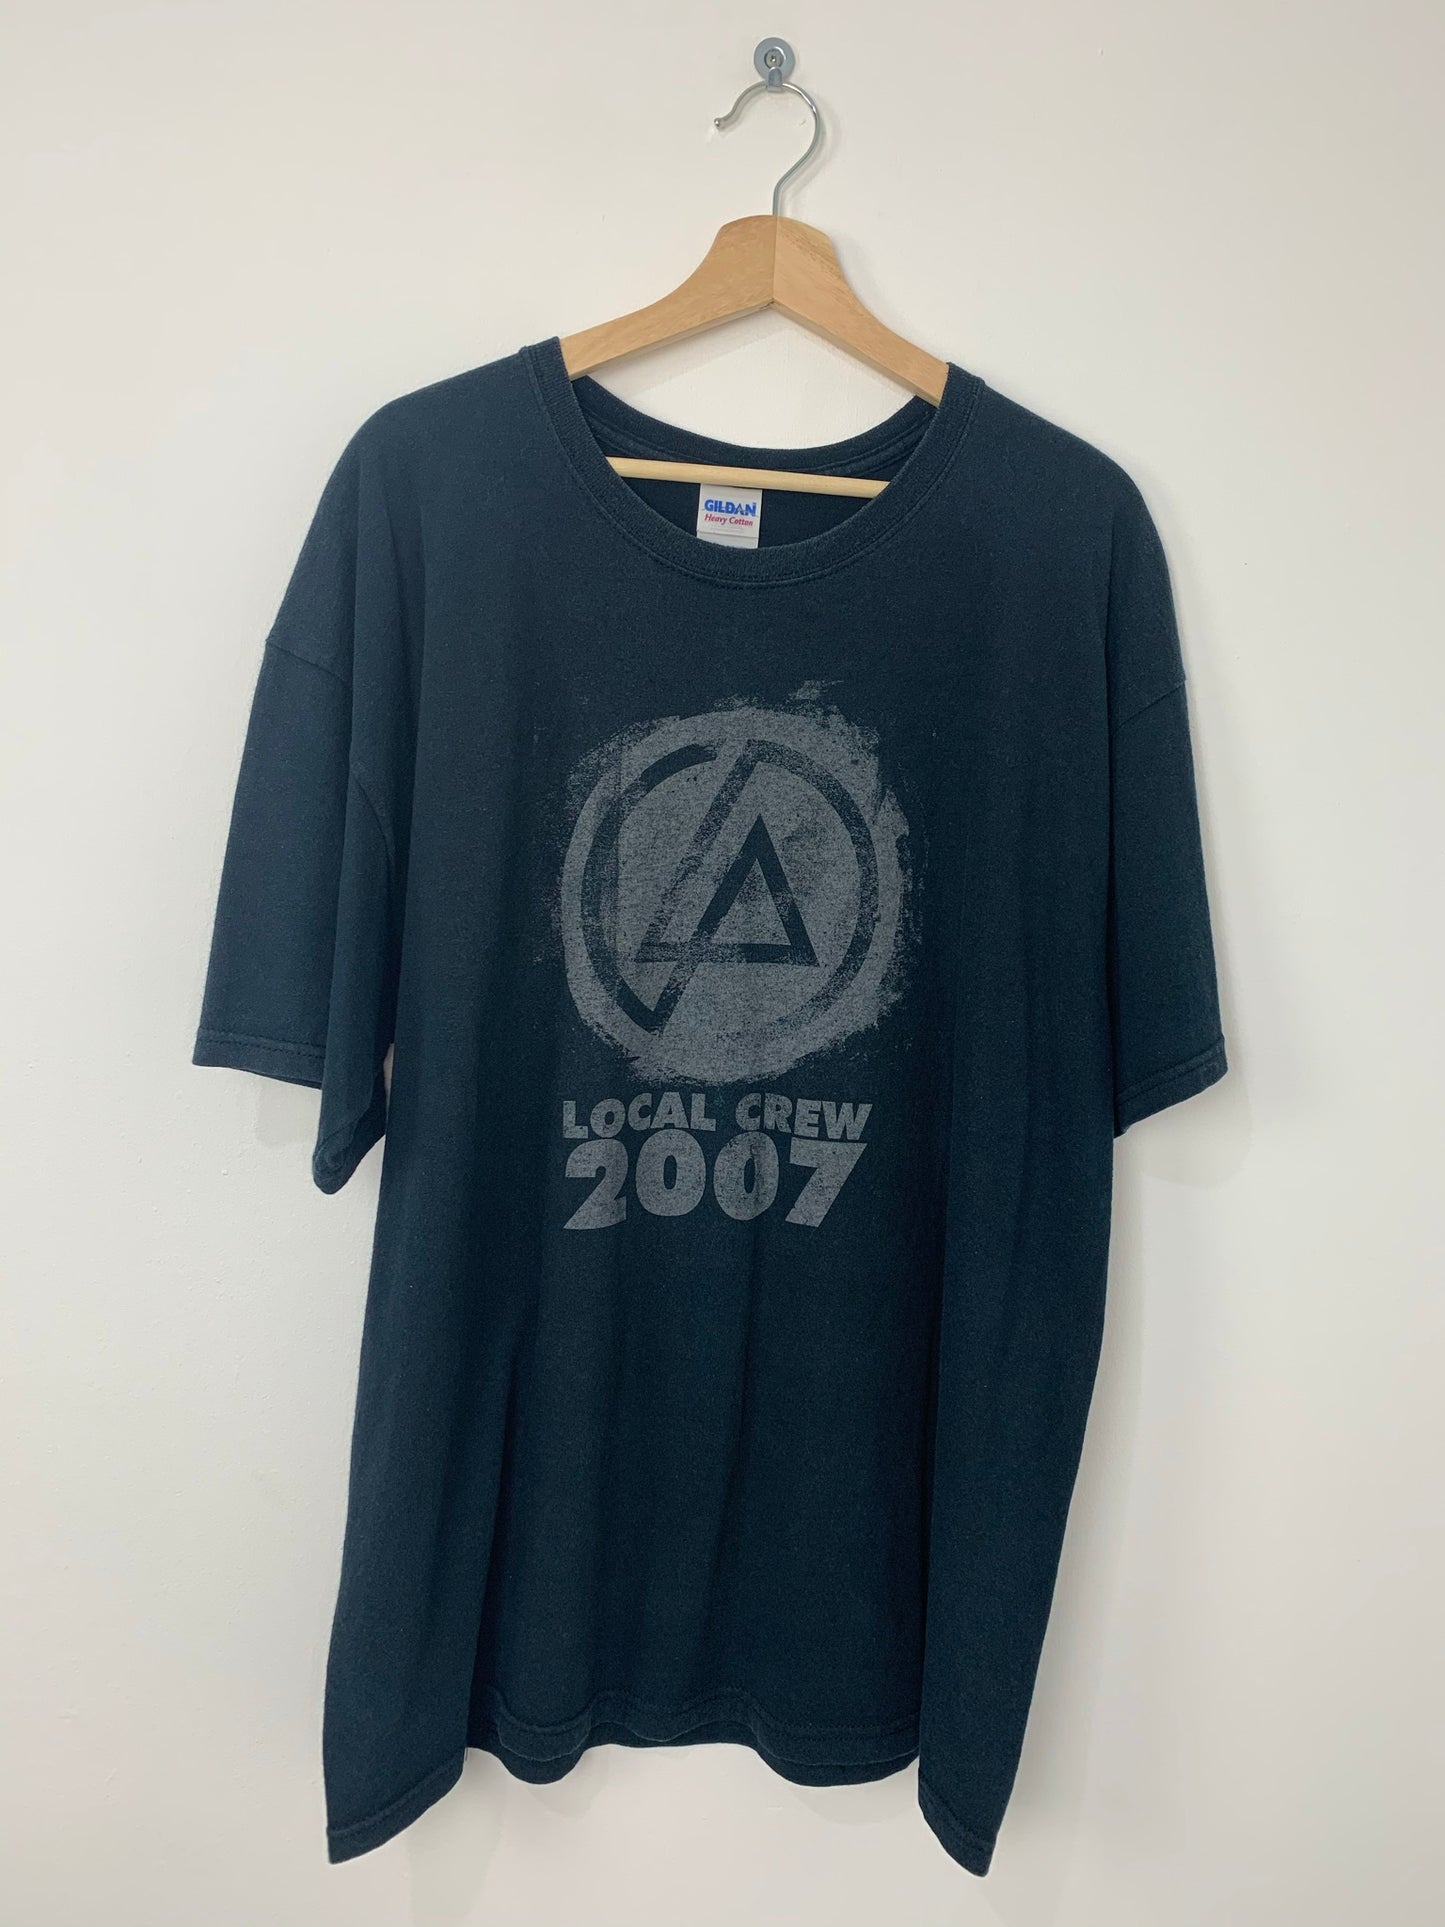 Live Local Crew 2007 T-Shirt